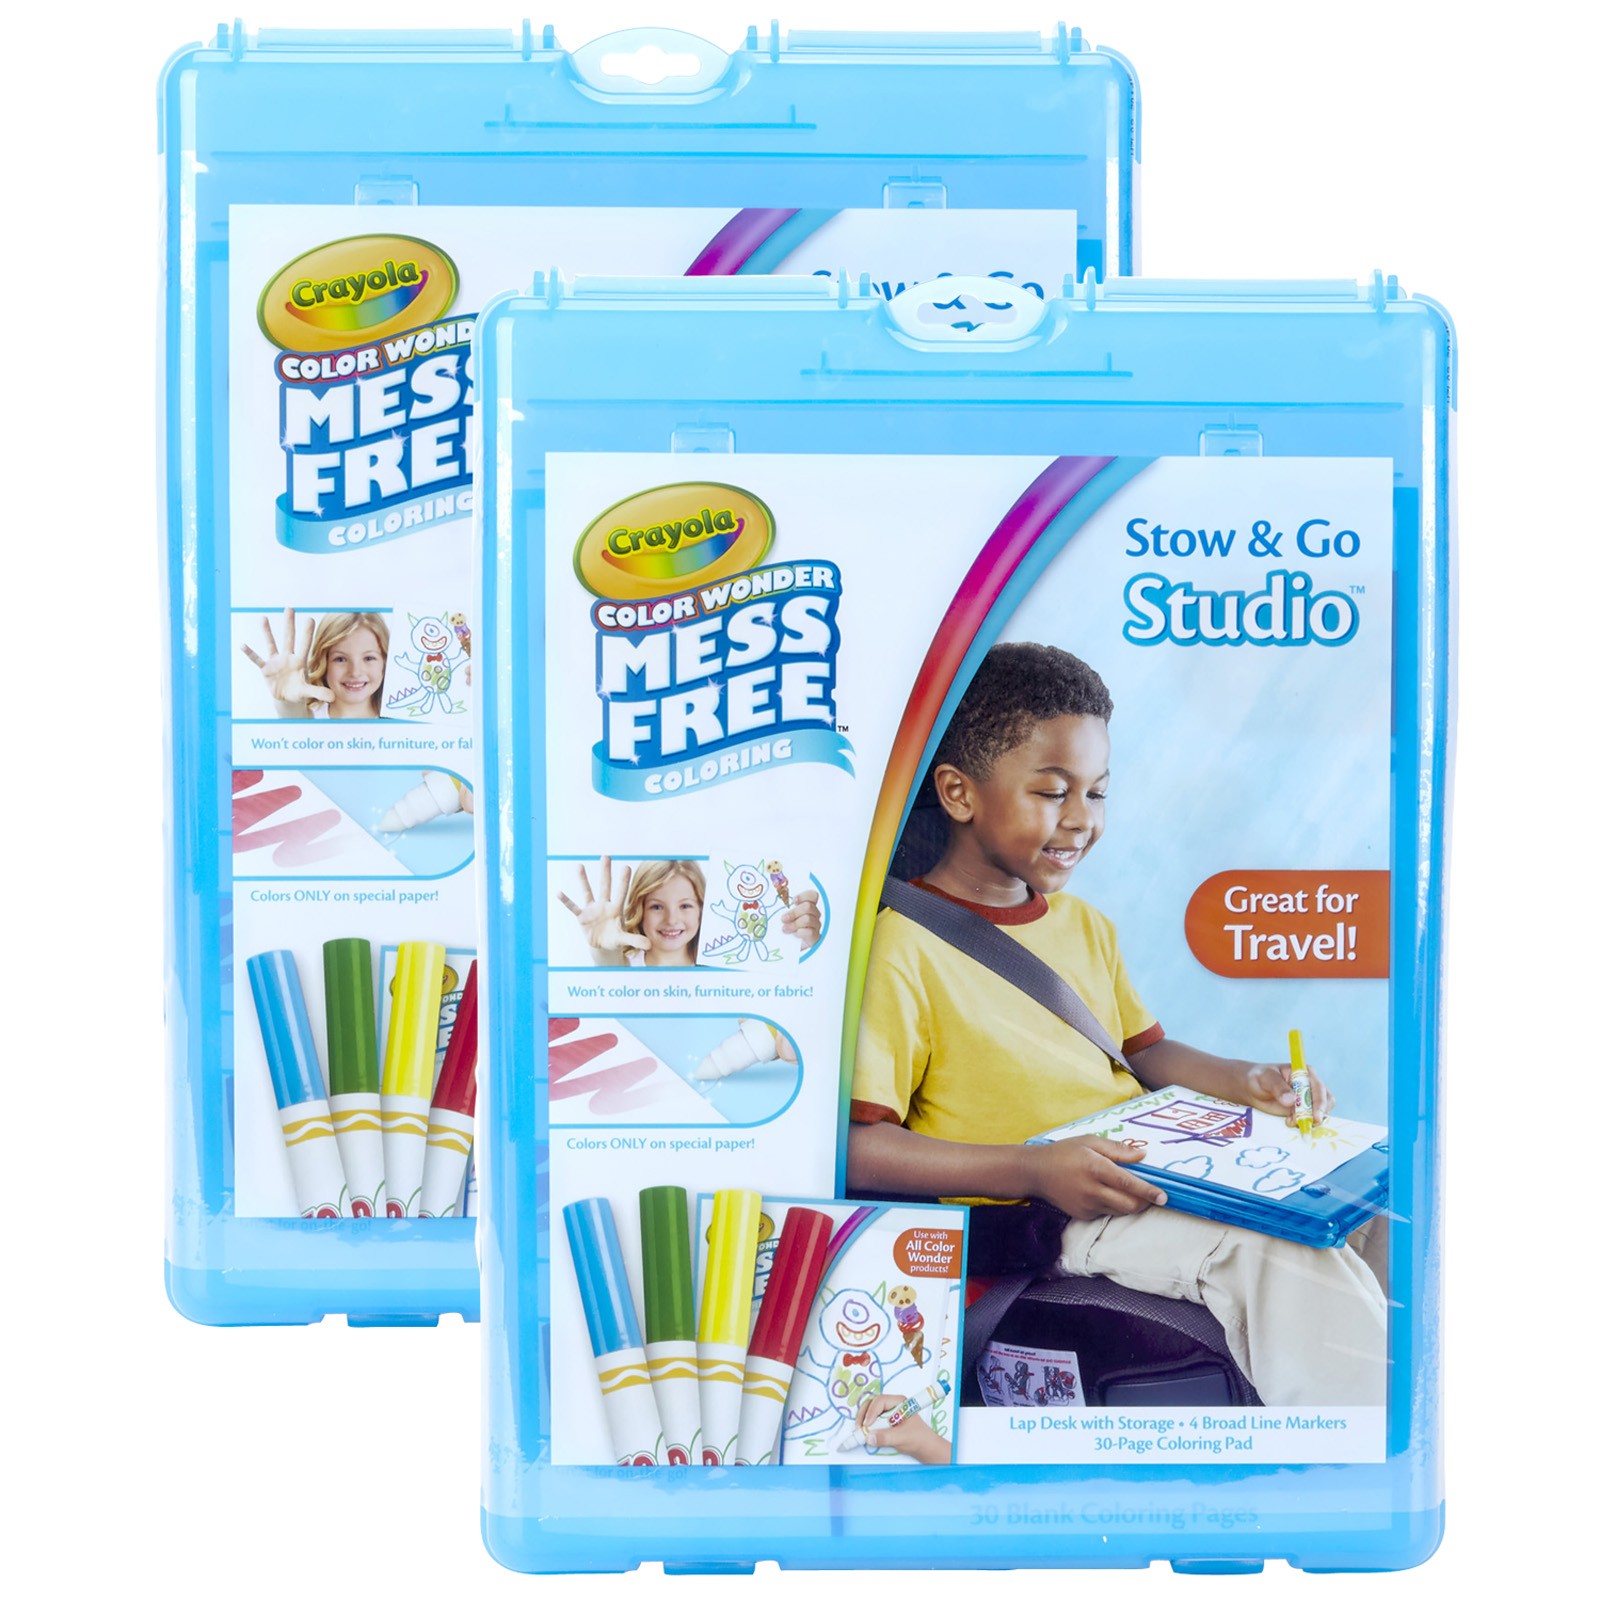 Color Wonder Mess Free Stow & Go Studio Travel Kit, 2 Kits